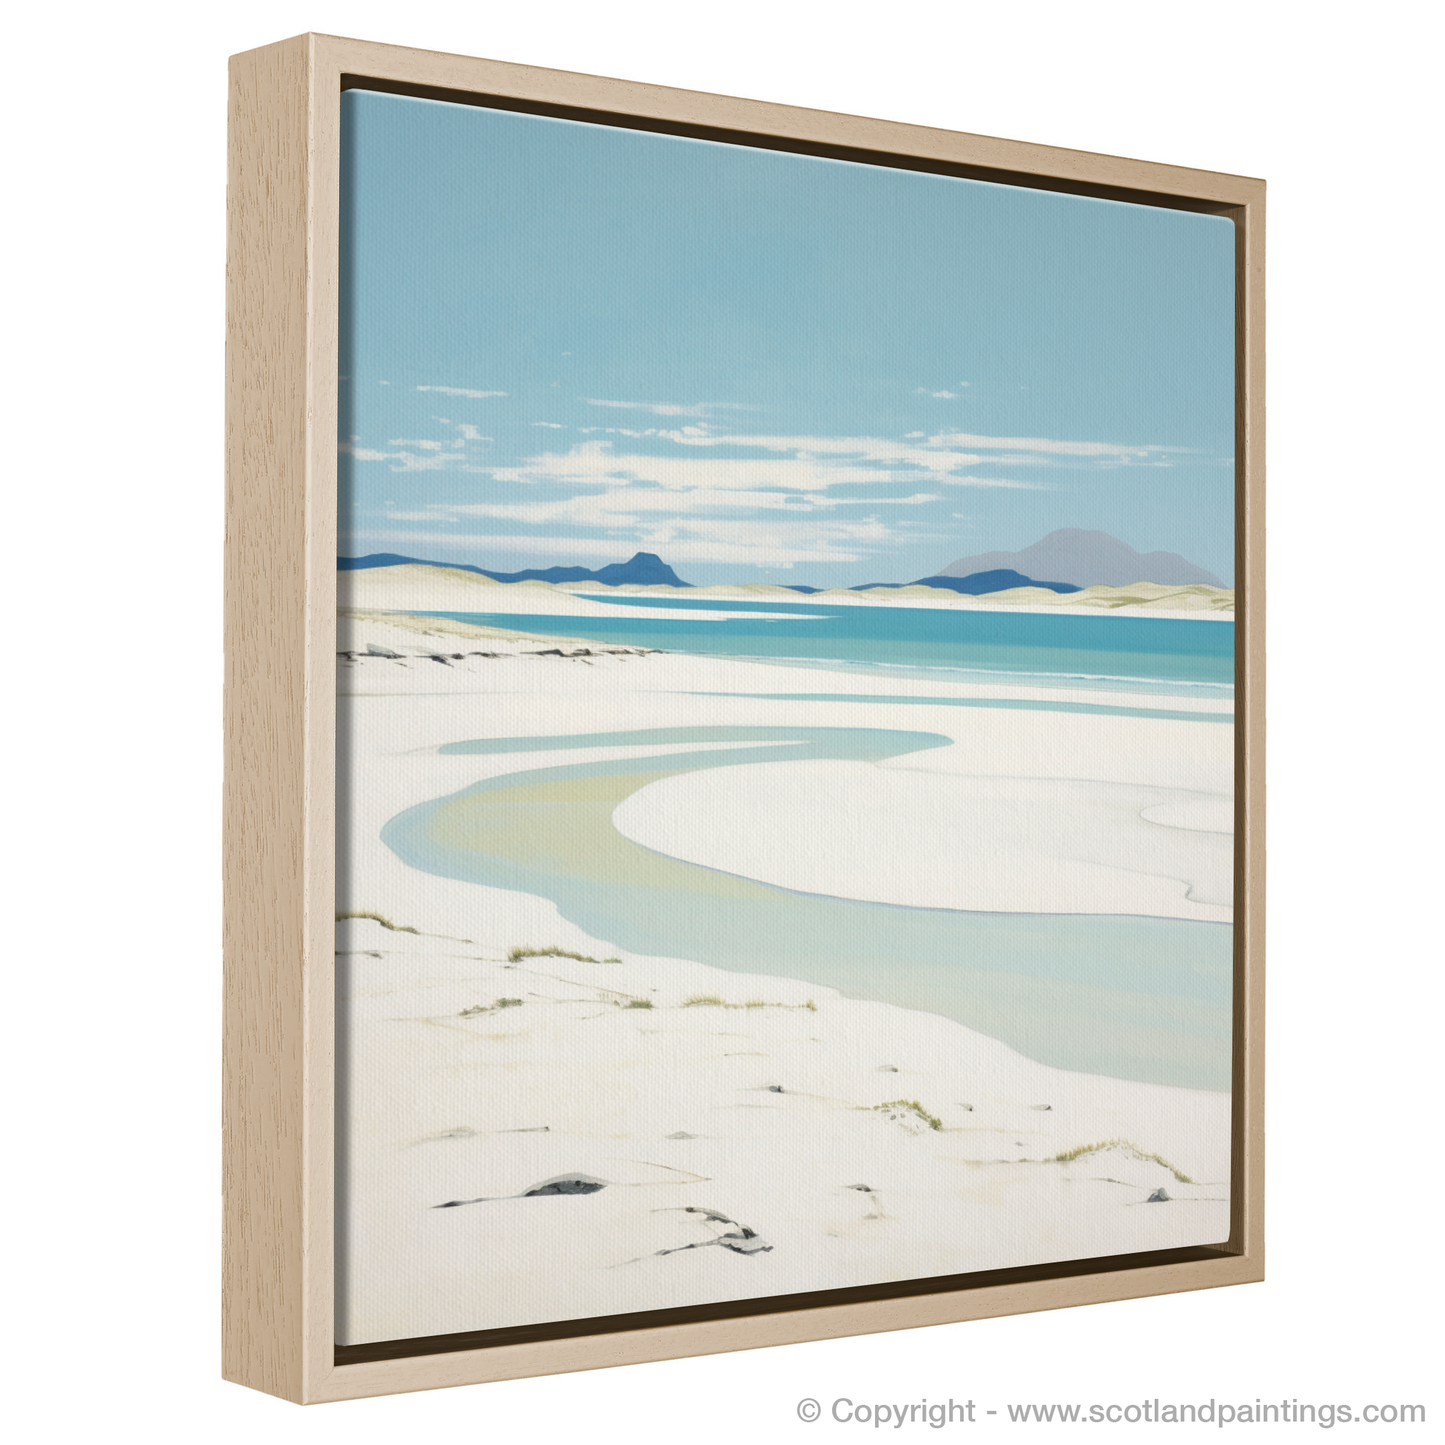 Painting and Art Print of Luskentyre Beach, Isle of Harris entitled "Luskentyre Beach Serenity: A Minimalist Ode to Scotland's Coast".